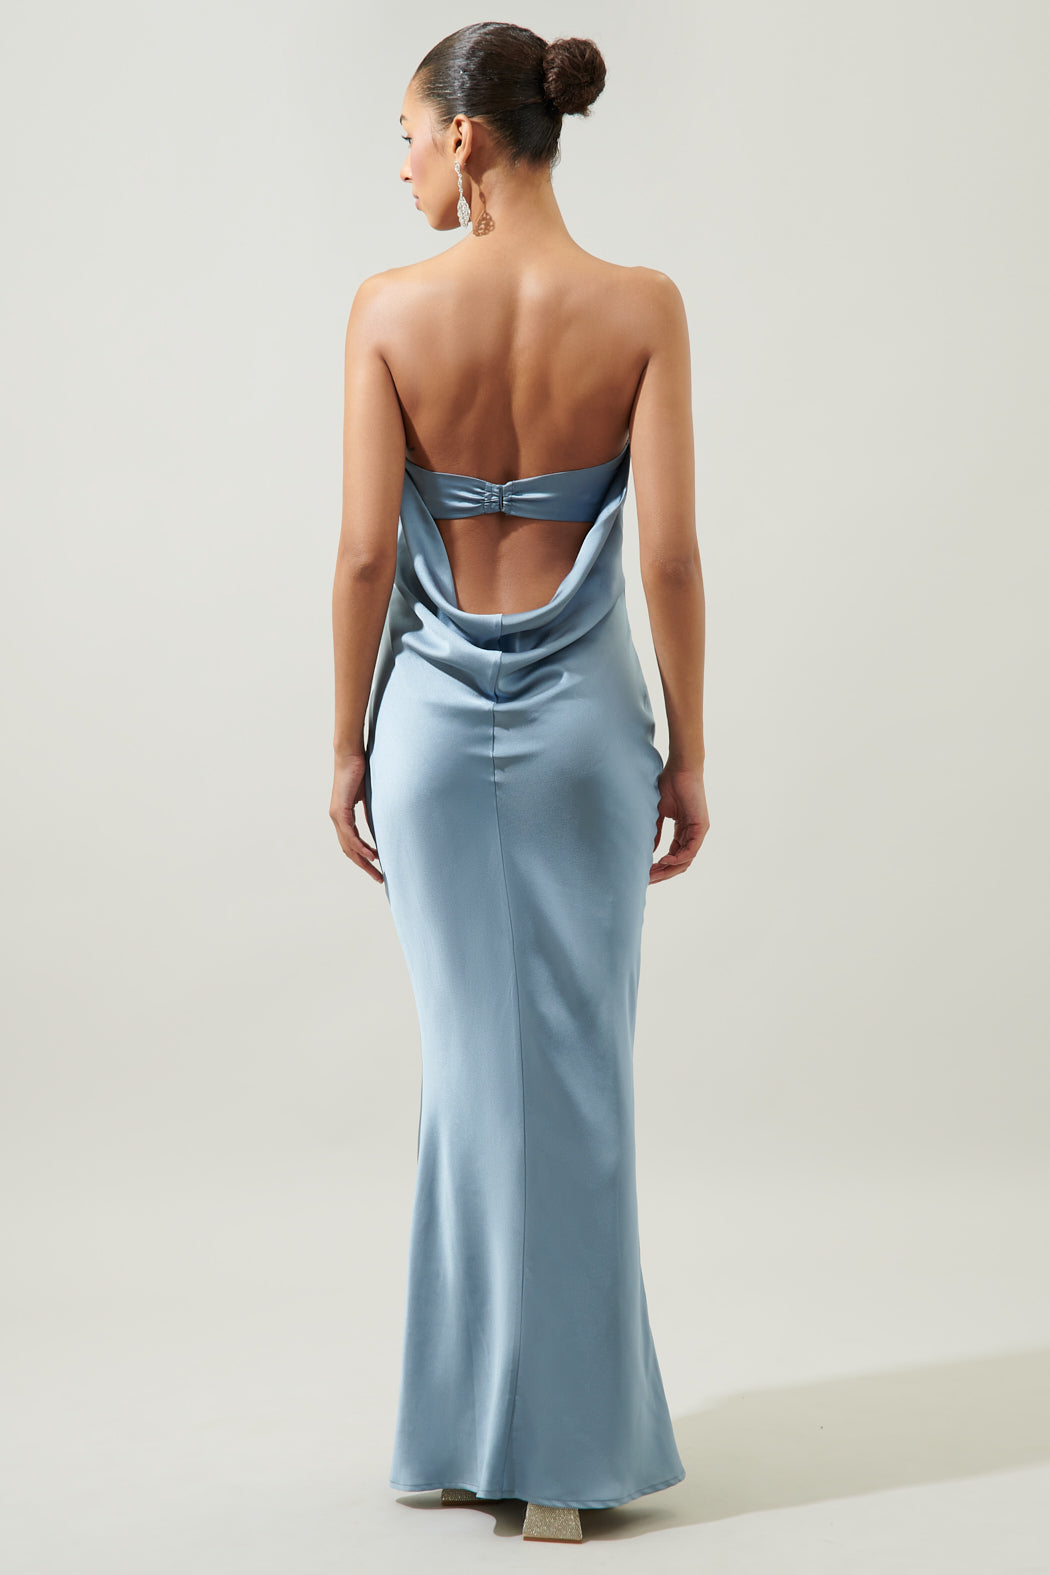 Blue Satin Maxi Dress - Asymmetrical Maxi Dress - Backless Dress